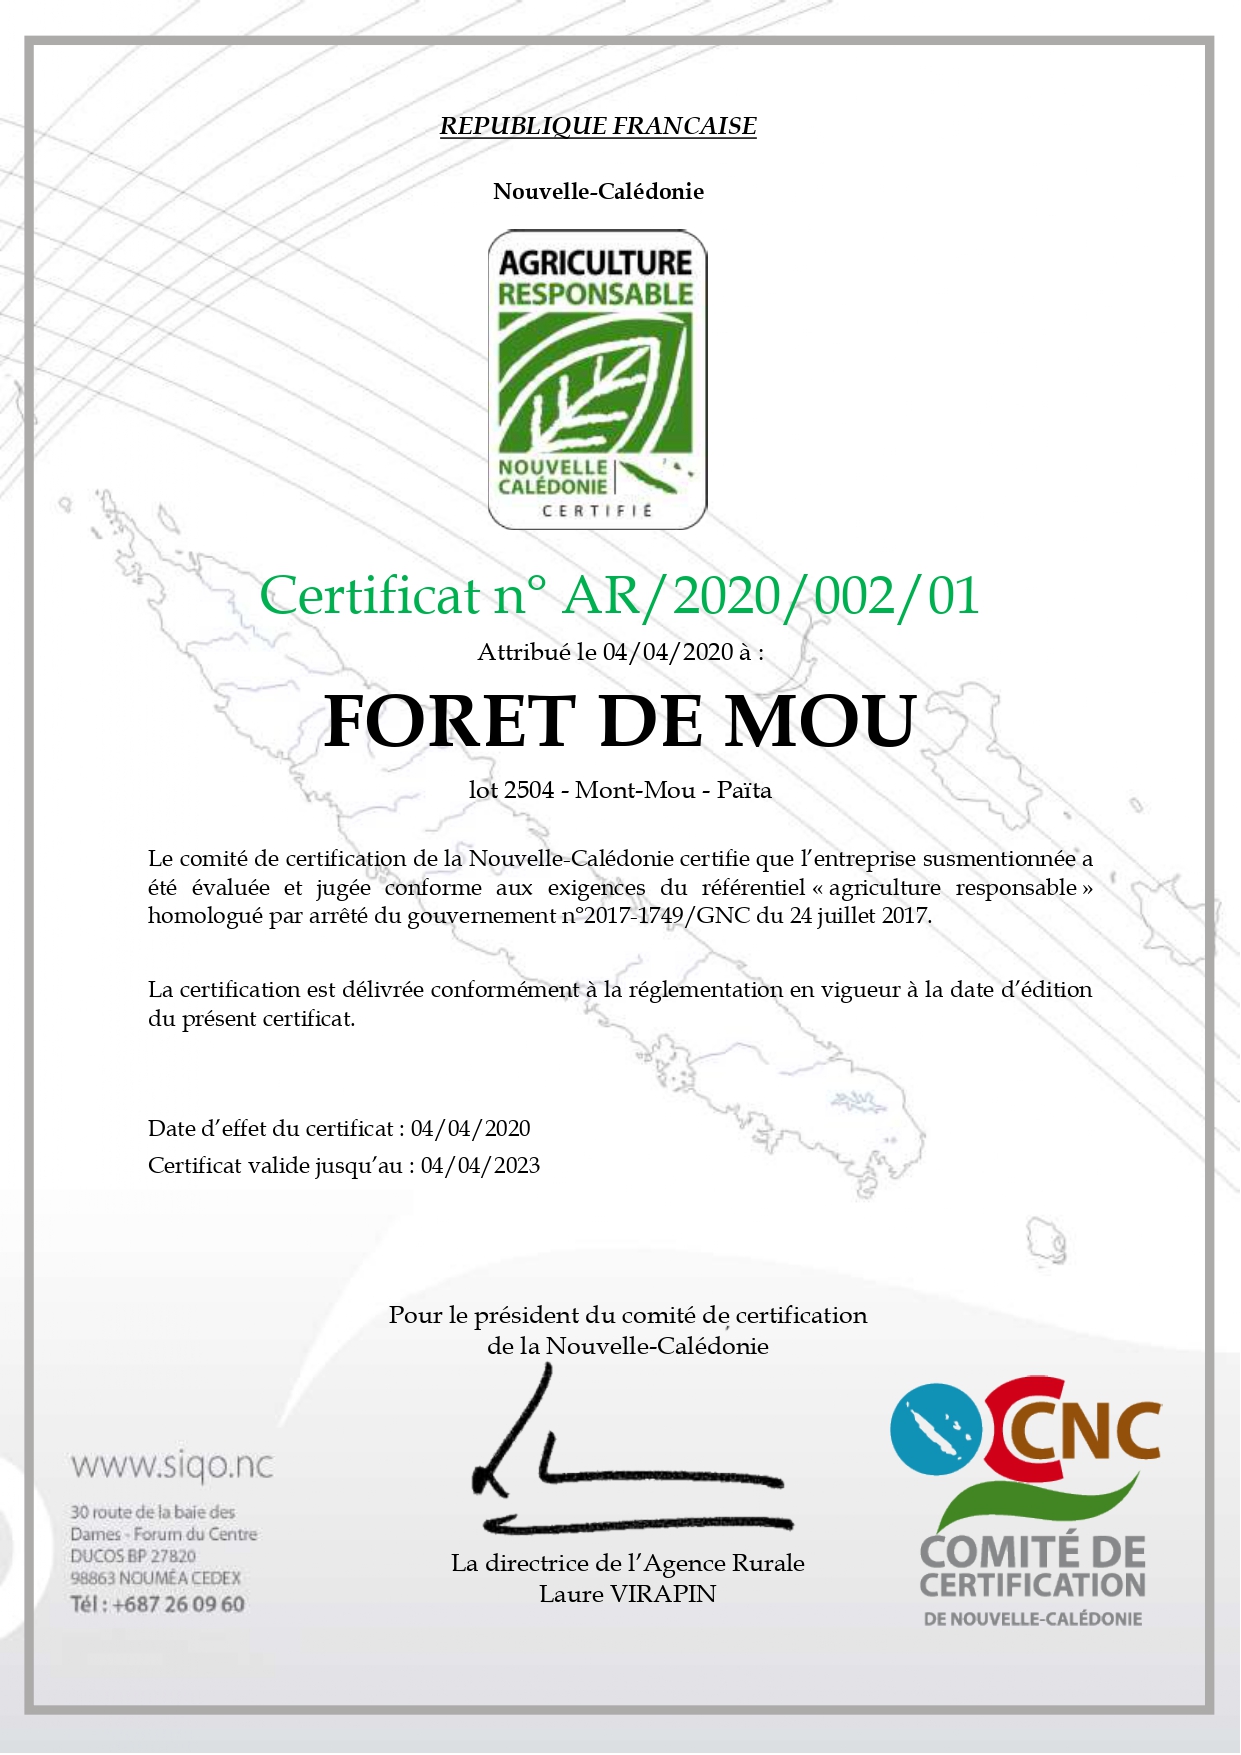 Agriculture+Responsable+AR+association+certification+nouvelle caledonie+innovante+foret+mou+chatelain